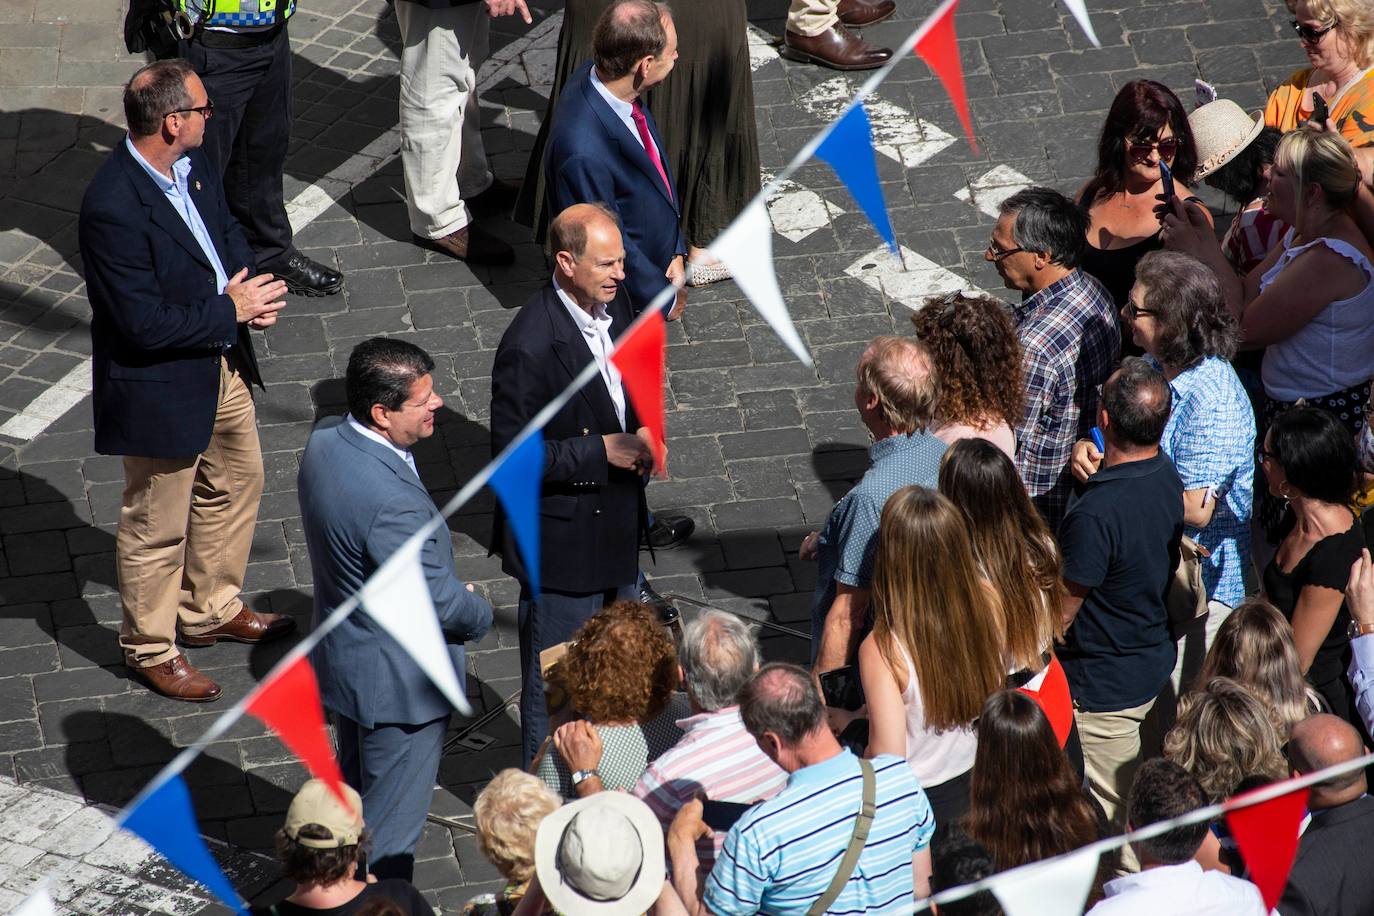 Fotos: Royal visit to Gibraltar, in pictures